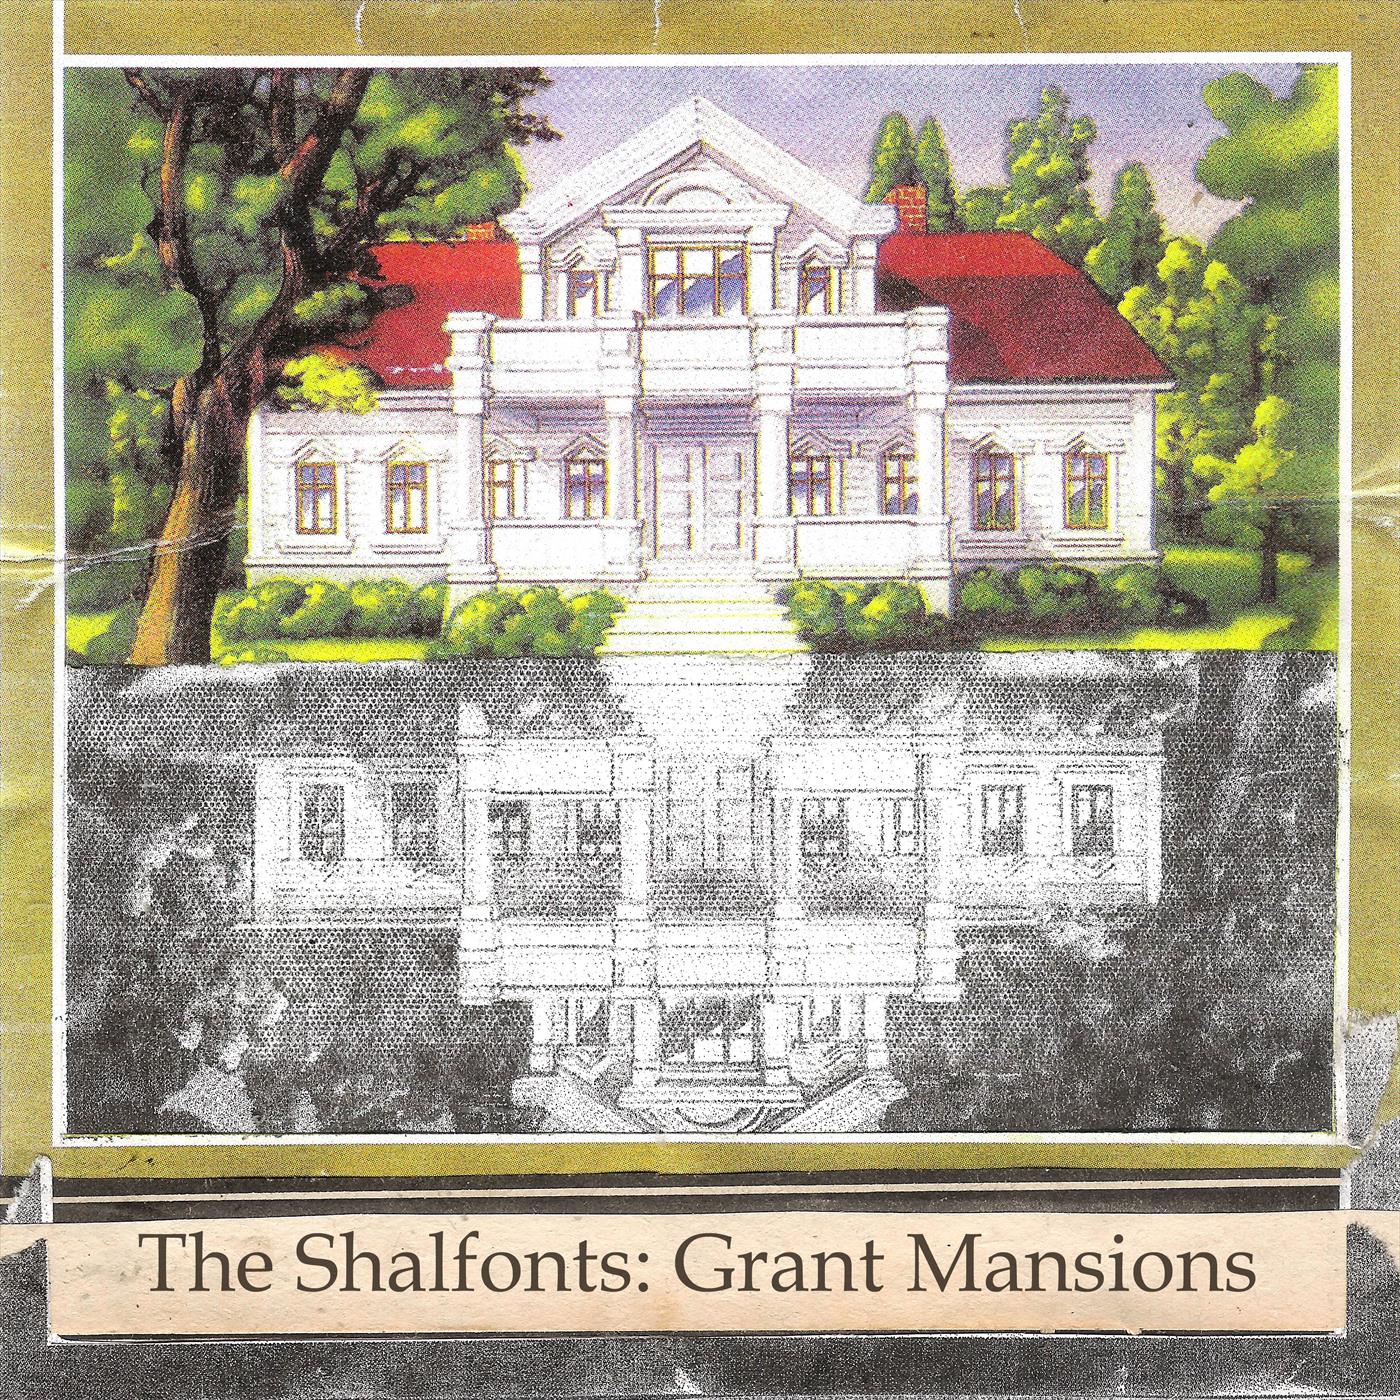 Grant Mansions